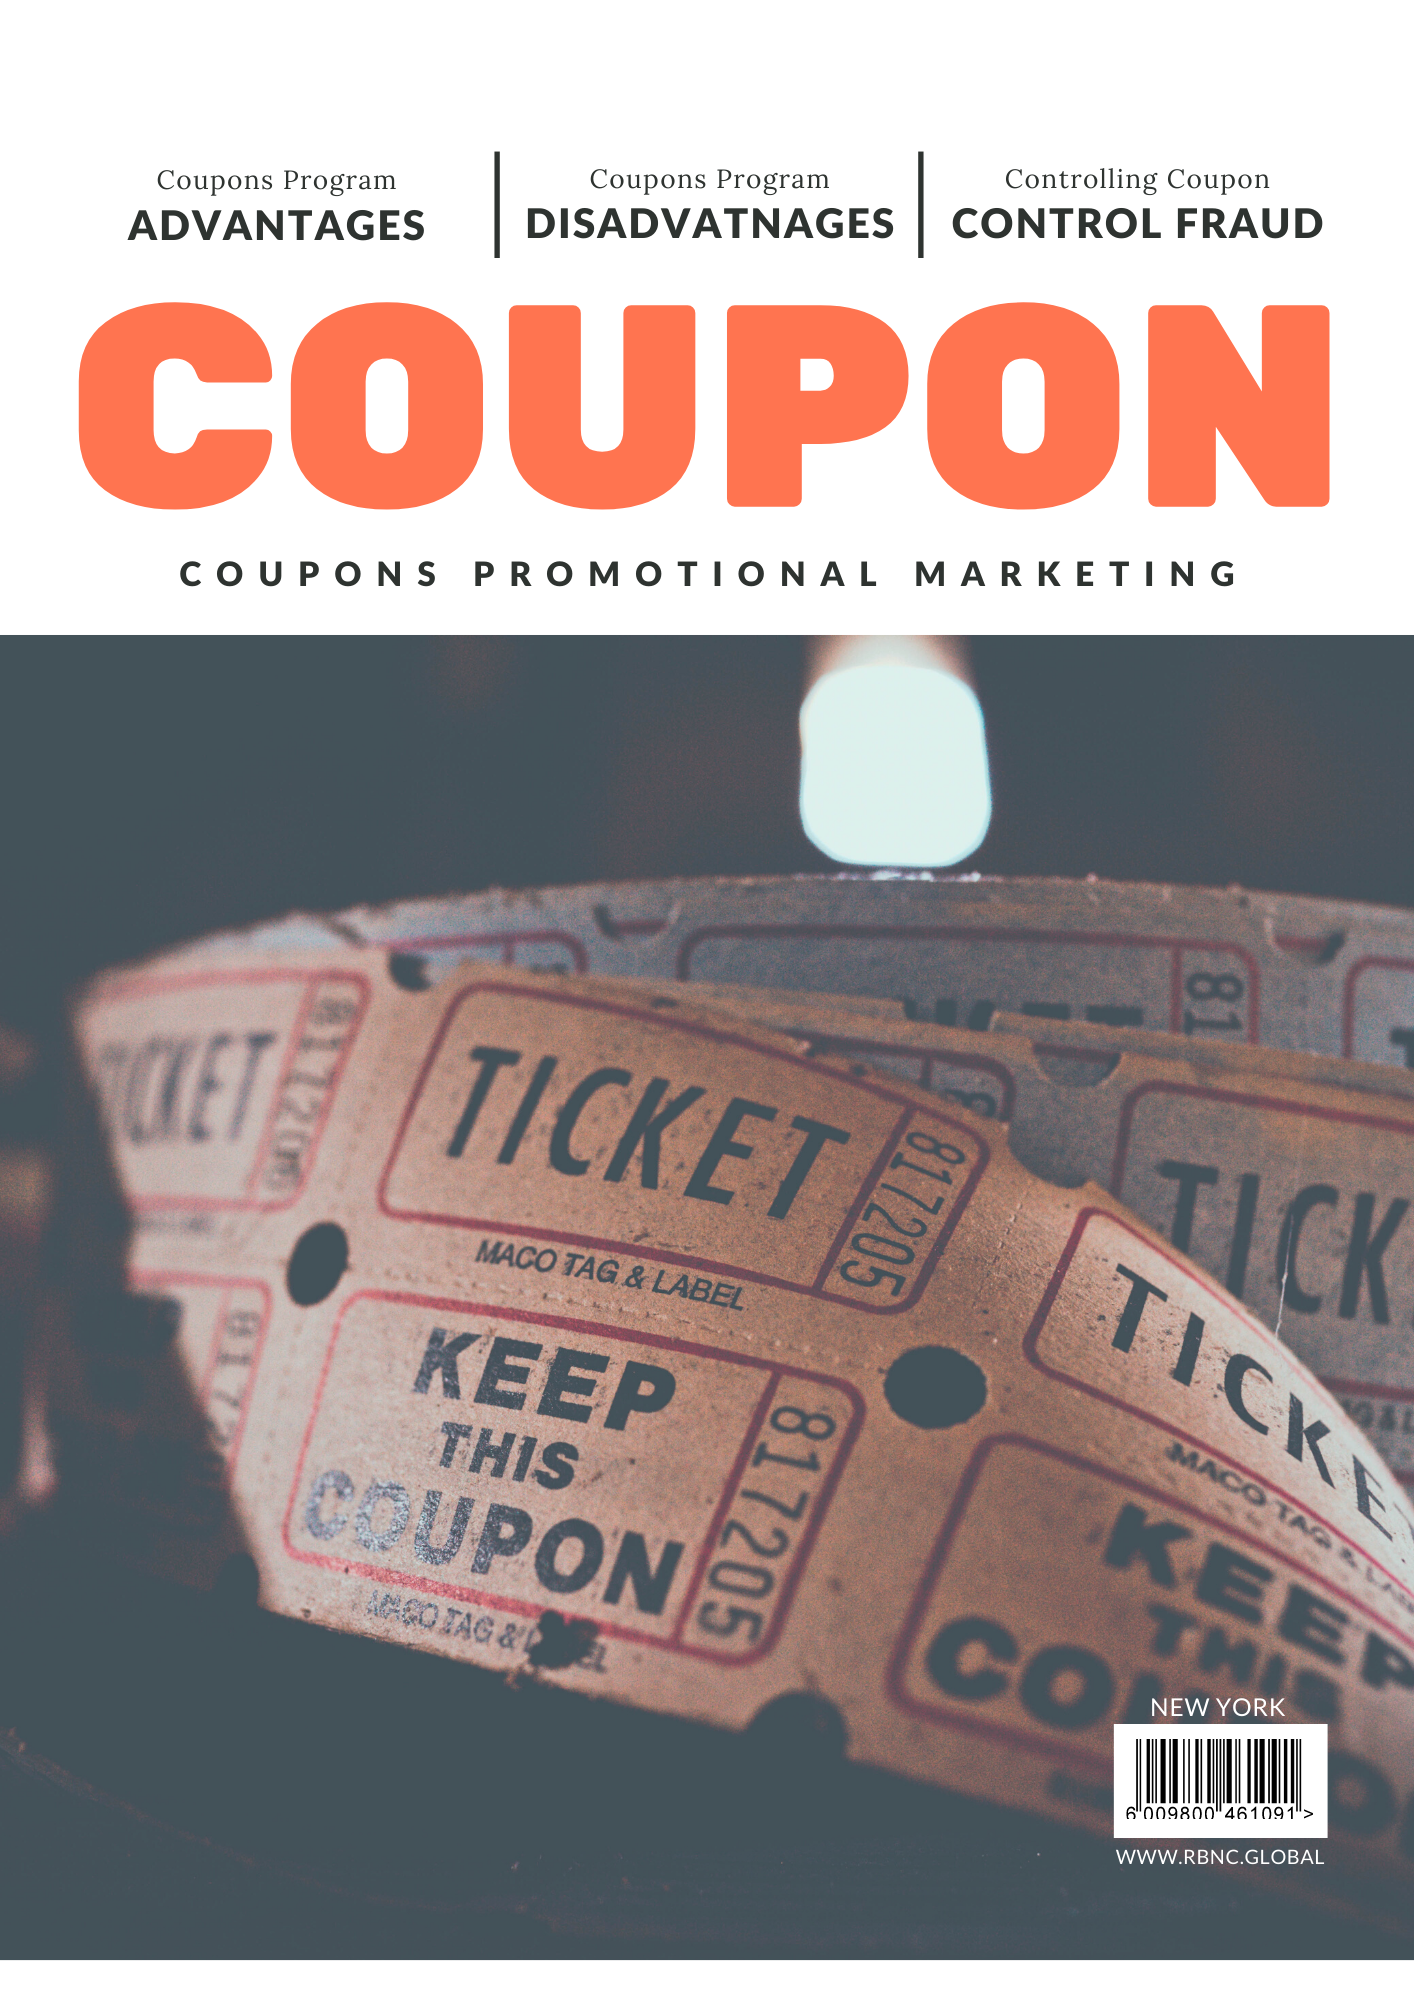 Coupon Program - Promotional Marketing Tool #2